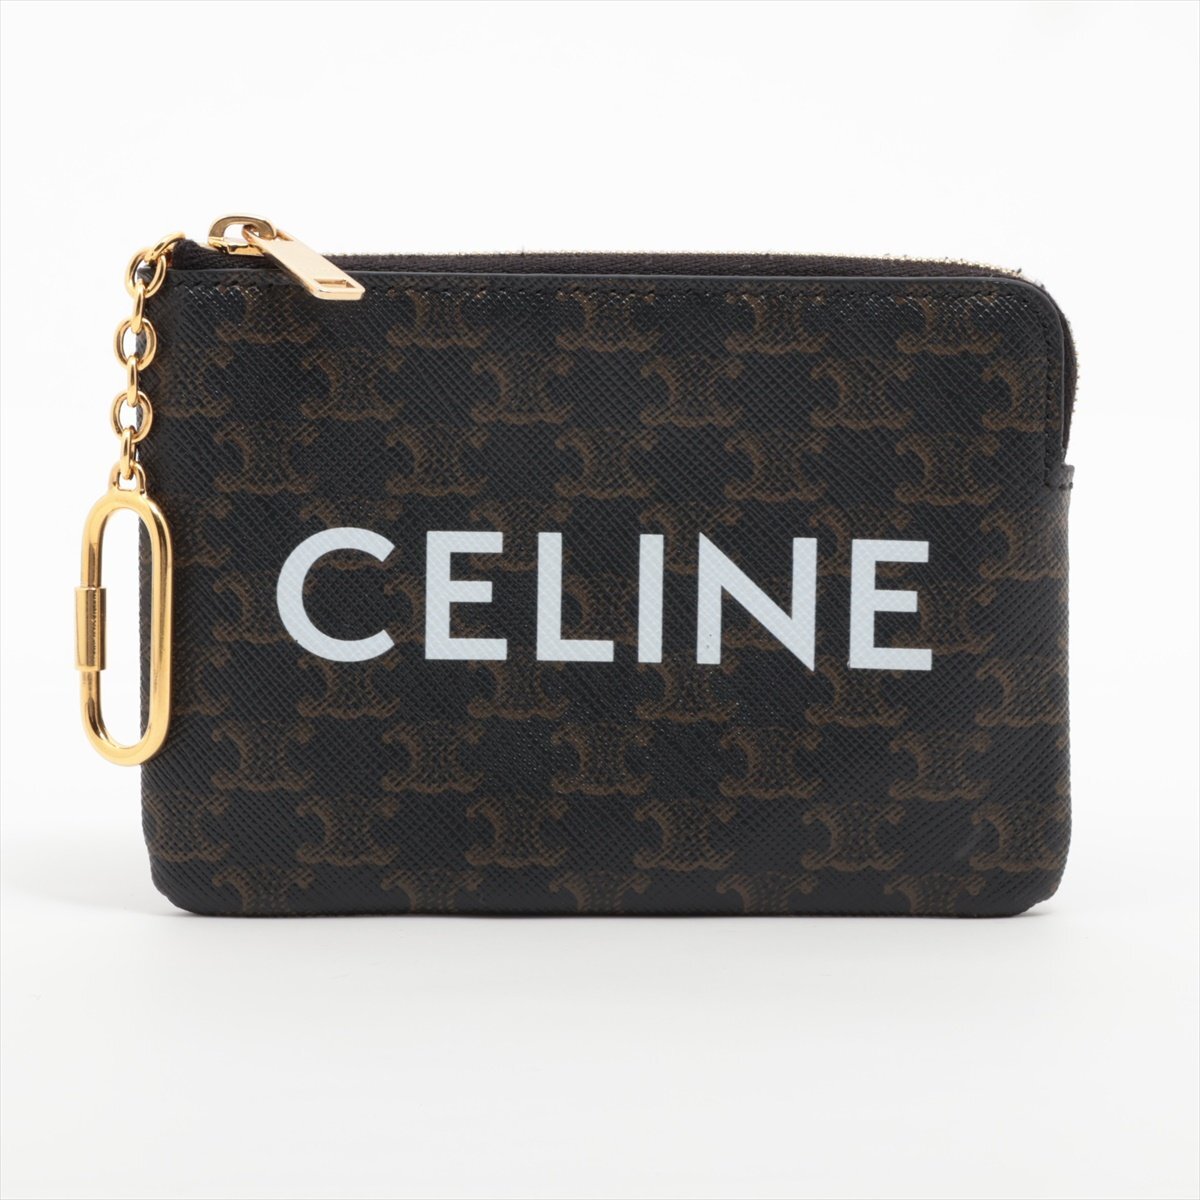 1 jpy # ultimate beautiful goods # present goods # Celine # dam card pouch kyu il Trio mf leather coin case change purse . purse maca lady's EEM U42-5